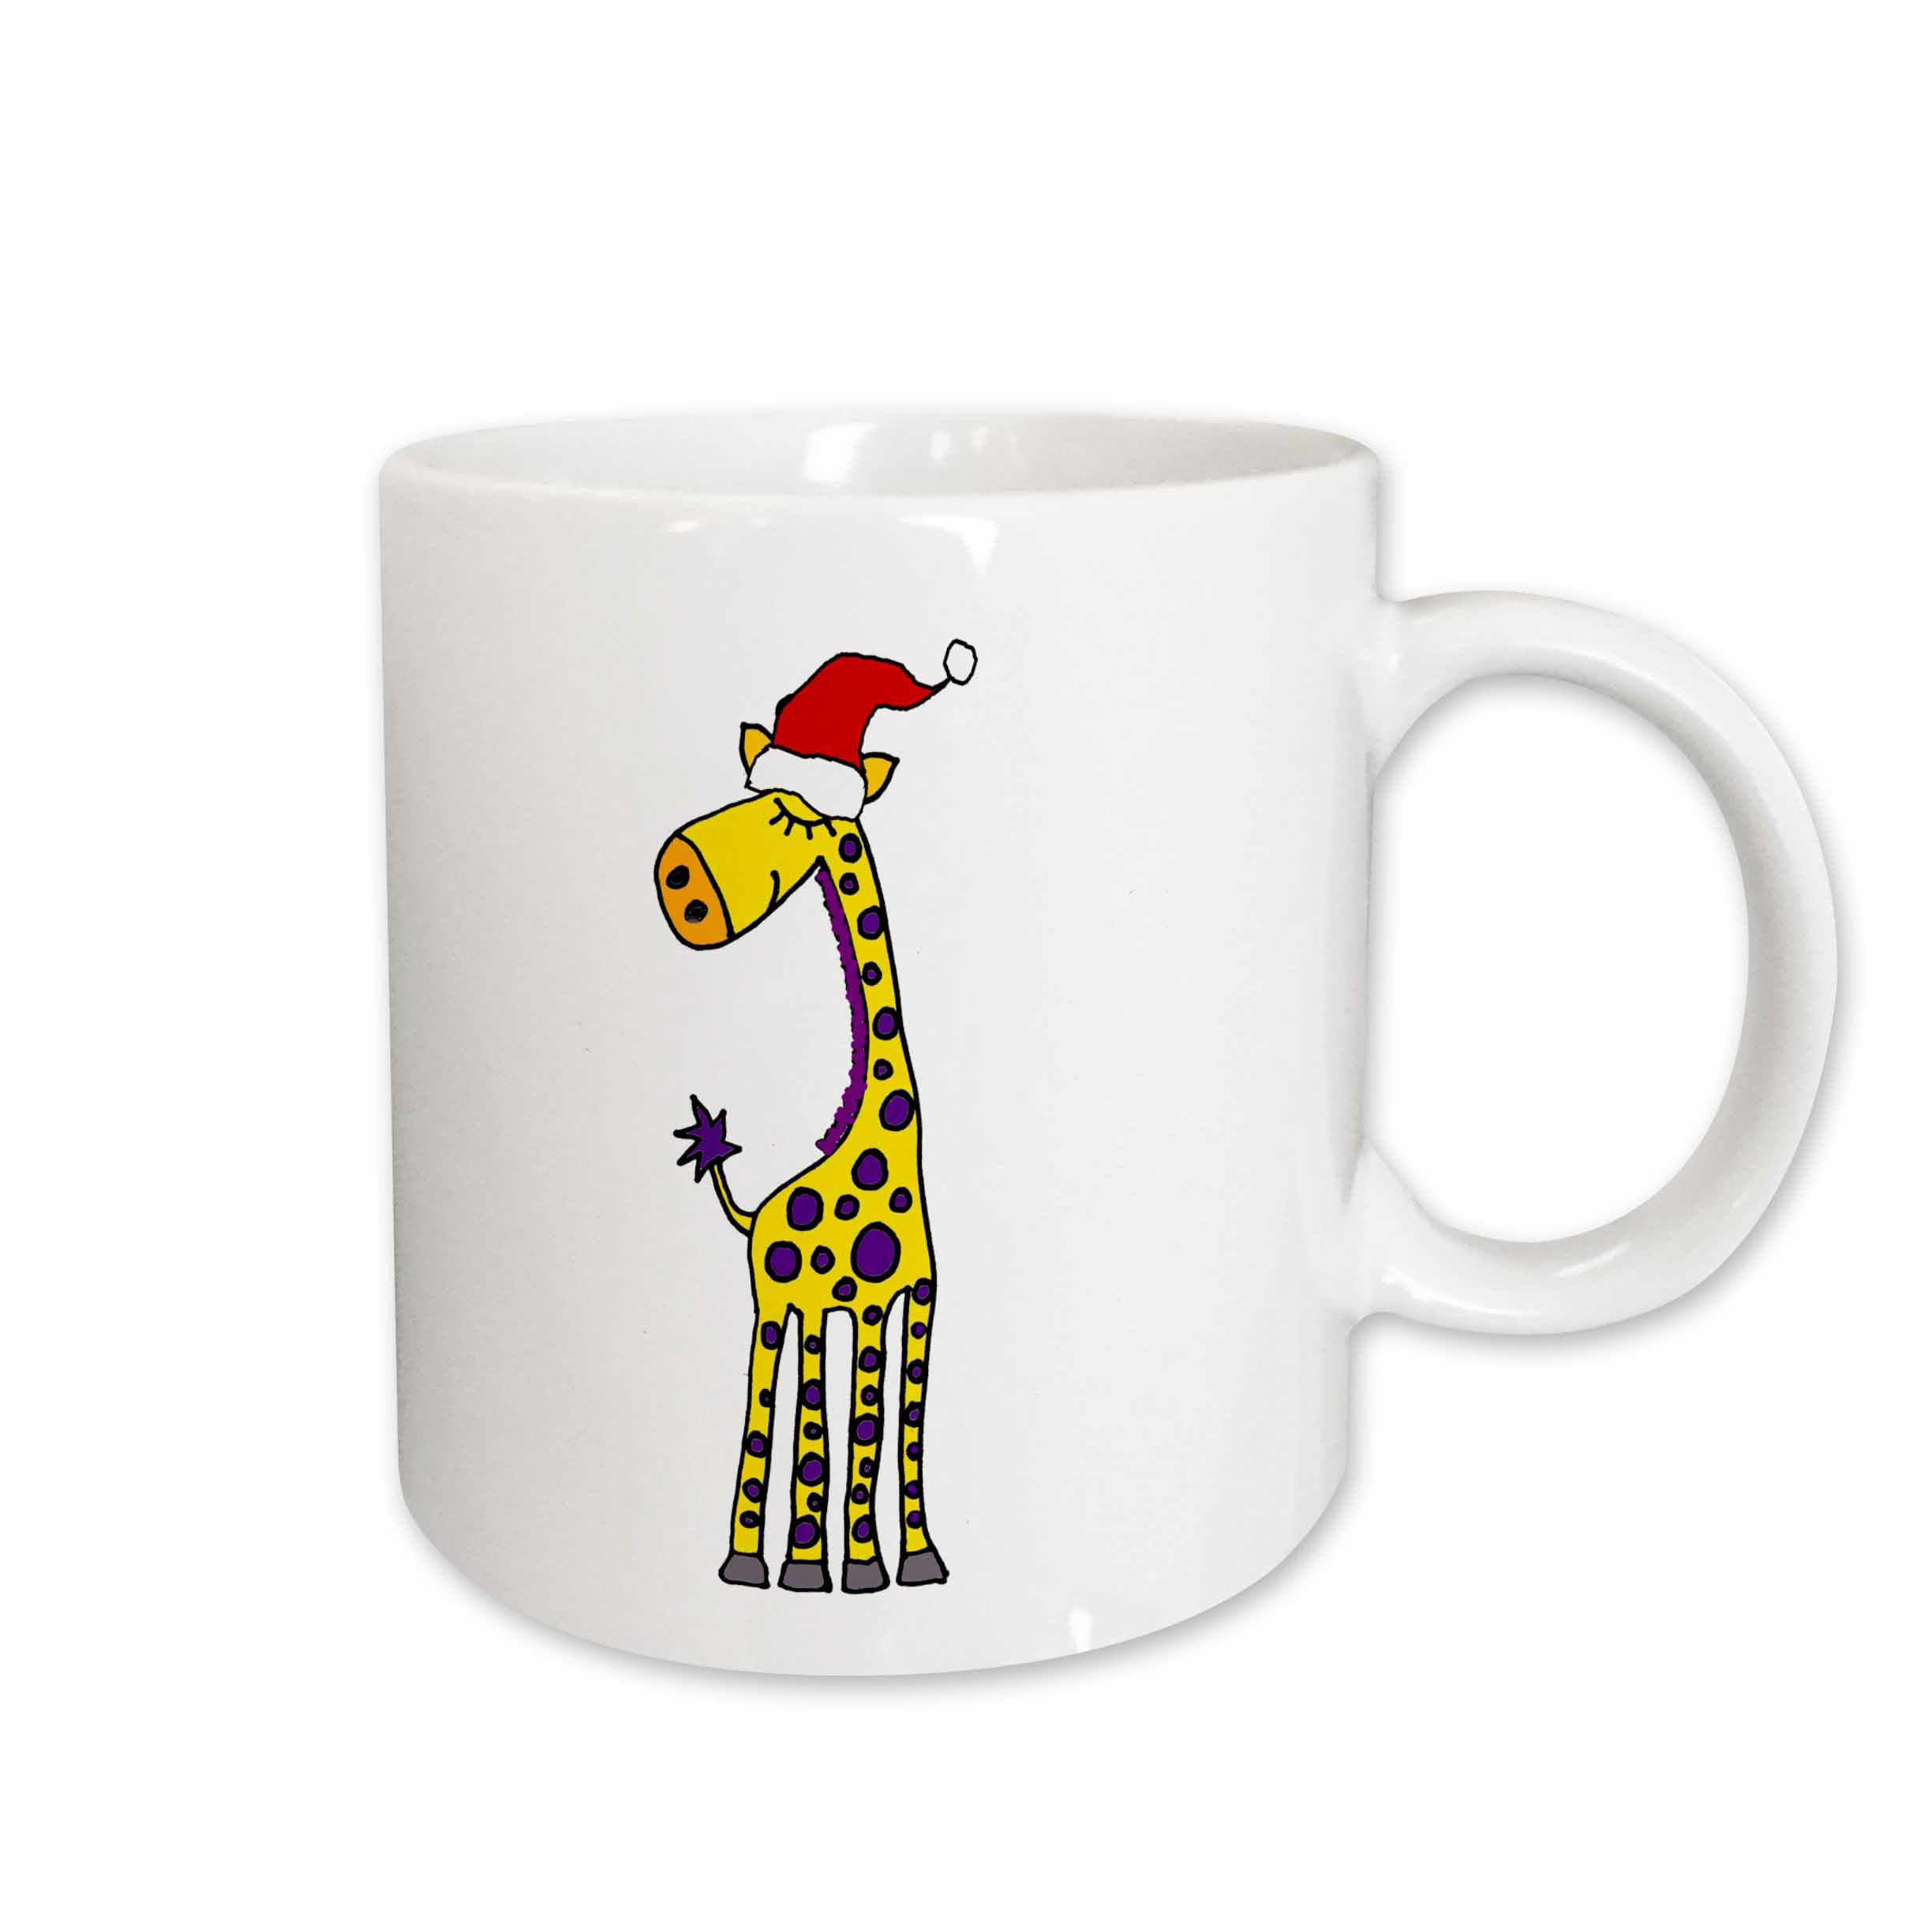 3dRose Christmas Giraffe in Snow Ceramic Mug 15-Ounce